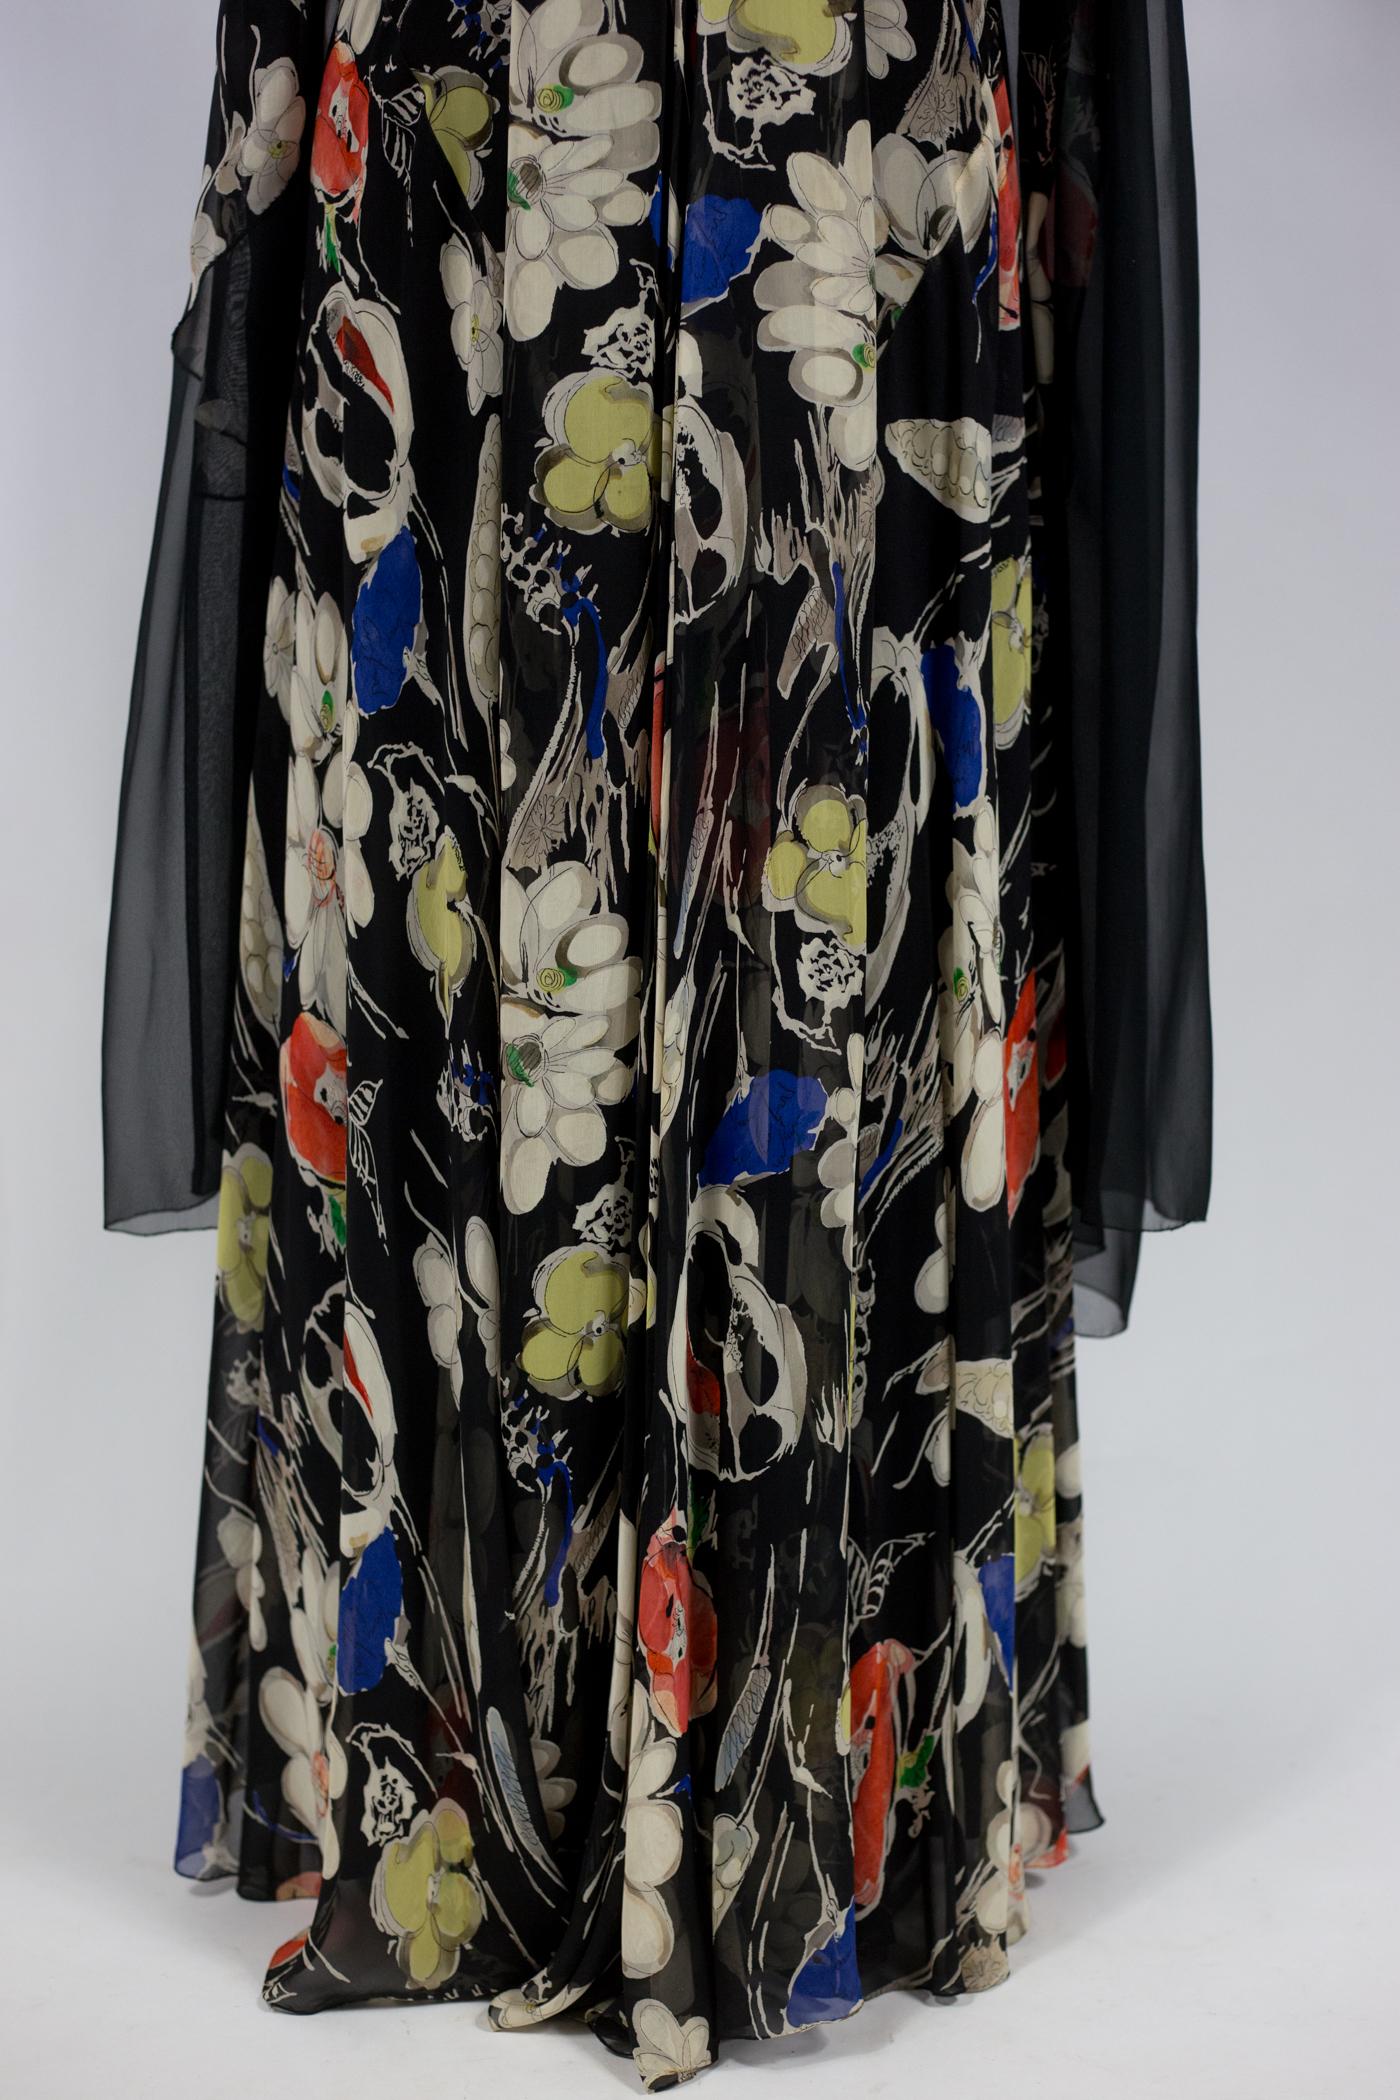 A French Printed Silk Chiffon Dress in the taste of Molyneux Circa 1935/1940 4